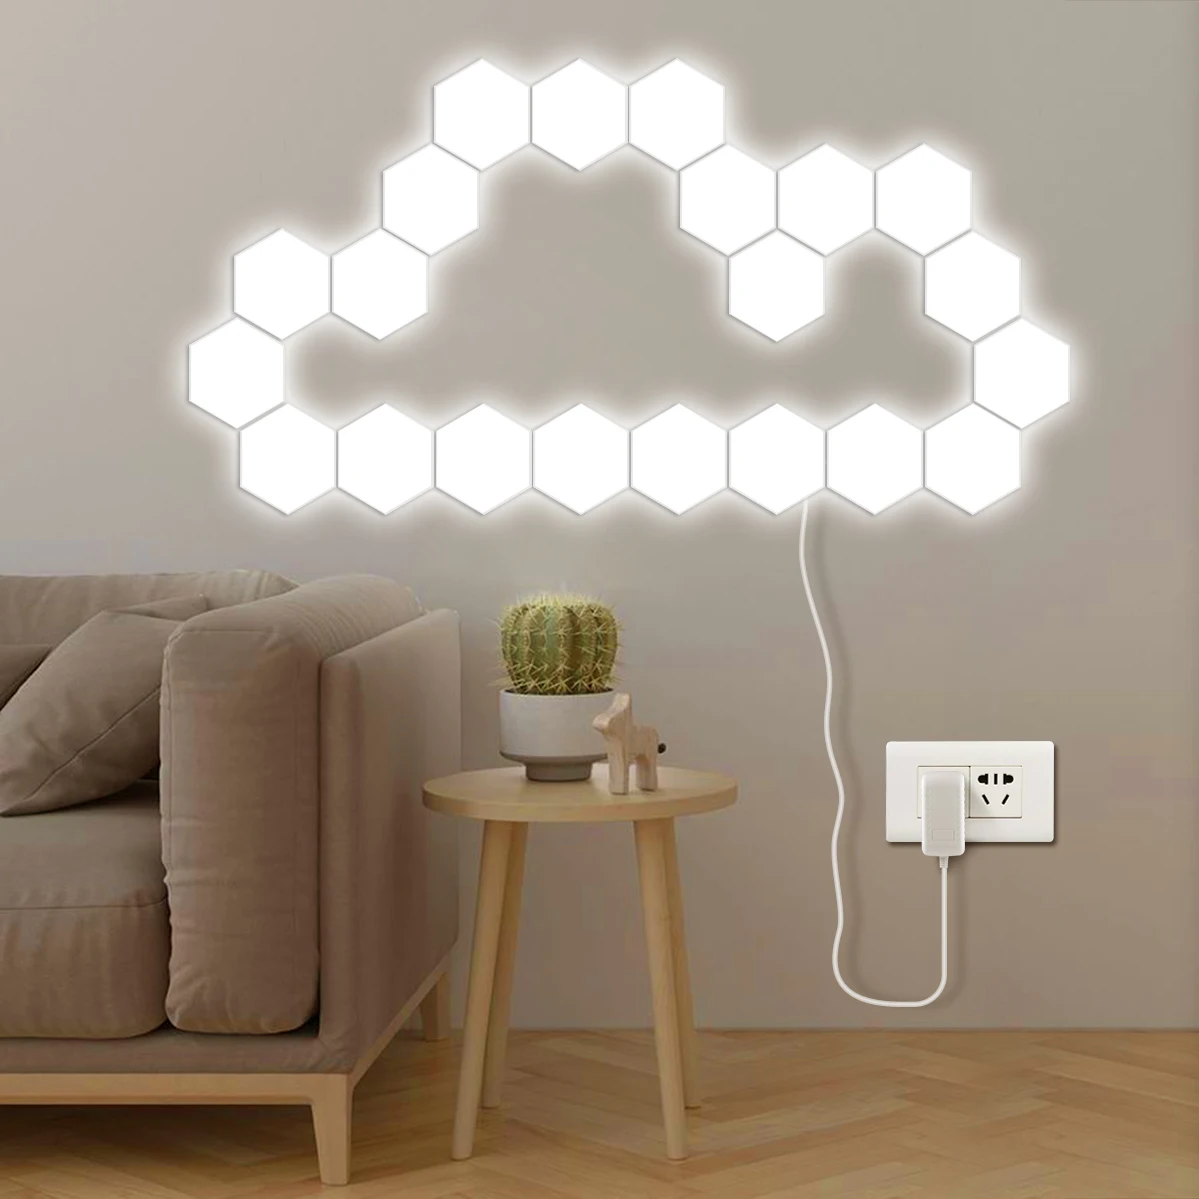 Details about   LED Modular Touch Quantum Hexagonal Magnetic Wall Light Sensor Fixture Bedroom 